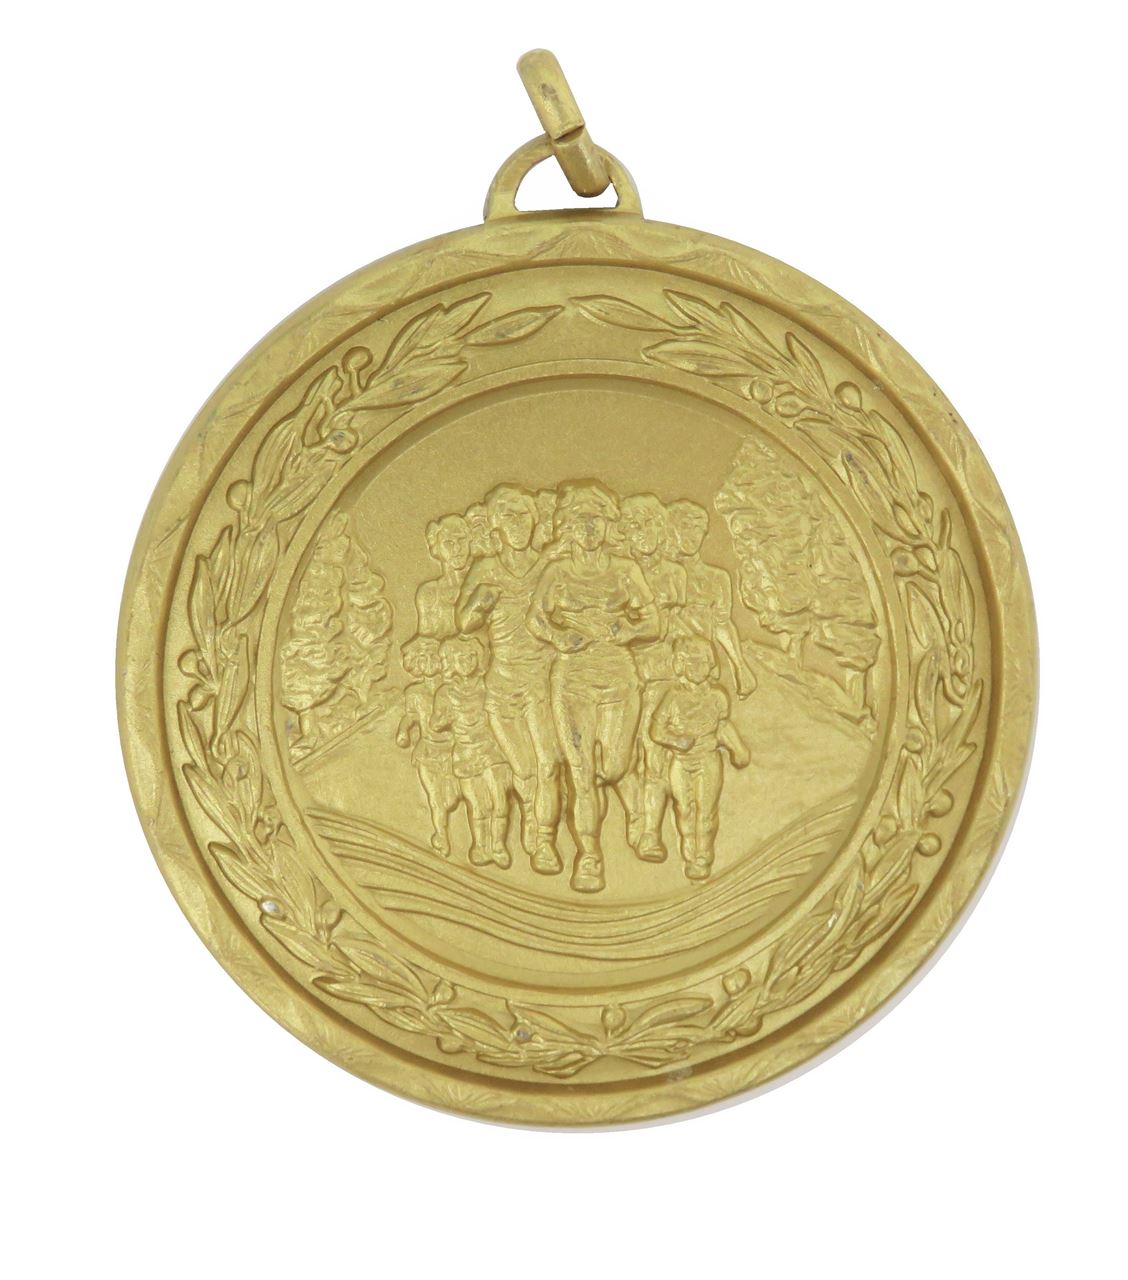 Gold Laurel Economy Fun Run Medal (size: 50mm) - 4120E